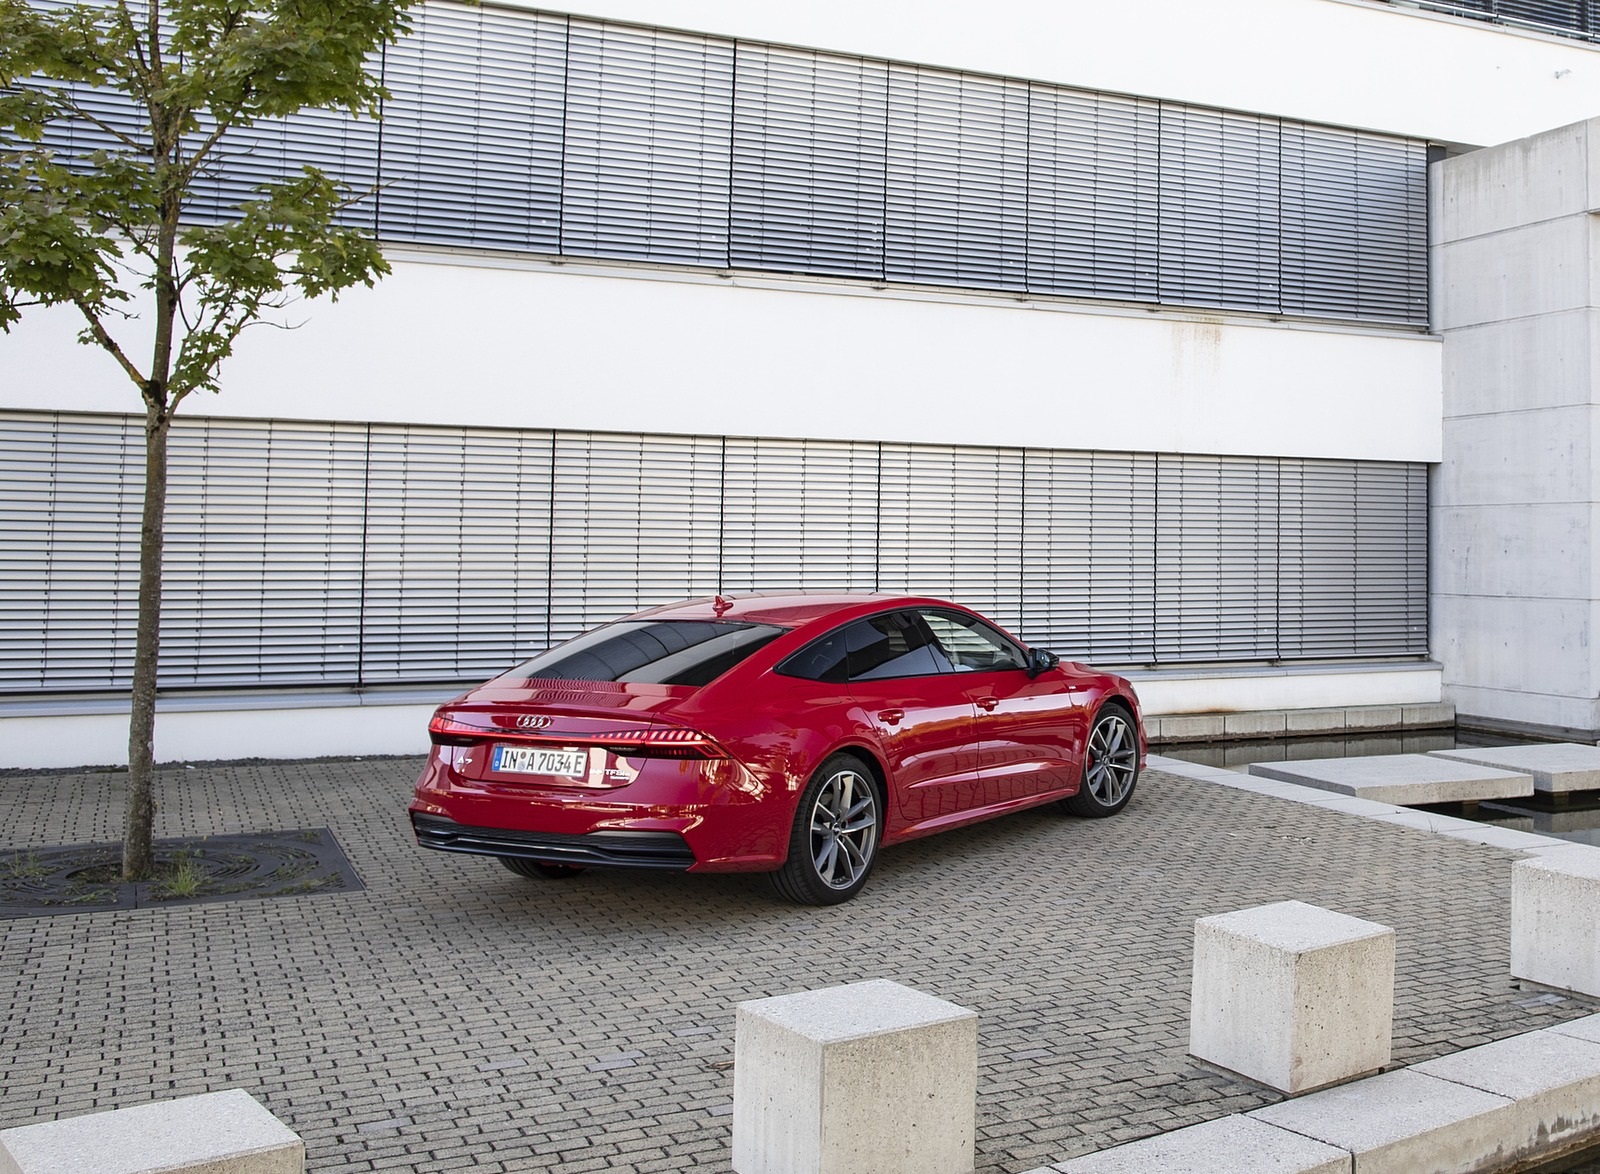 2020 Audi A7 Sportback 55 TFSI e quattro Plug-In Hybrid (Color: Tango Red) Rear Three-Quarter Wallpapers #34 of 73